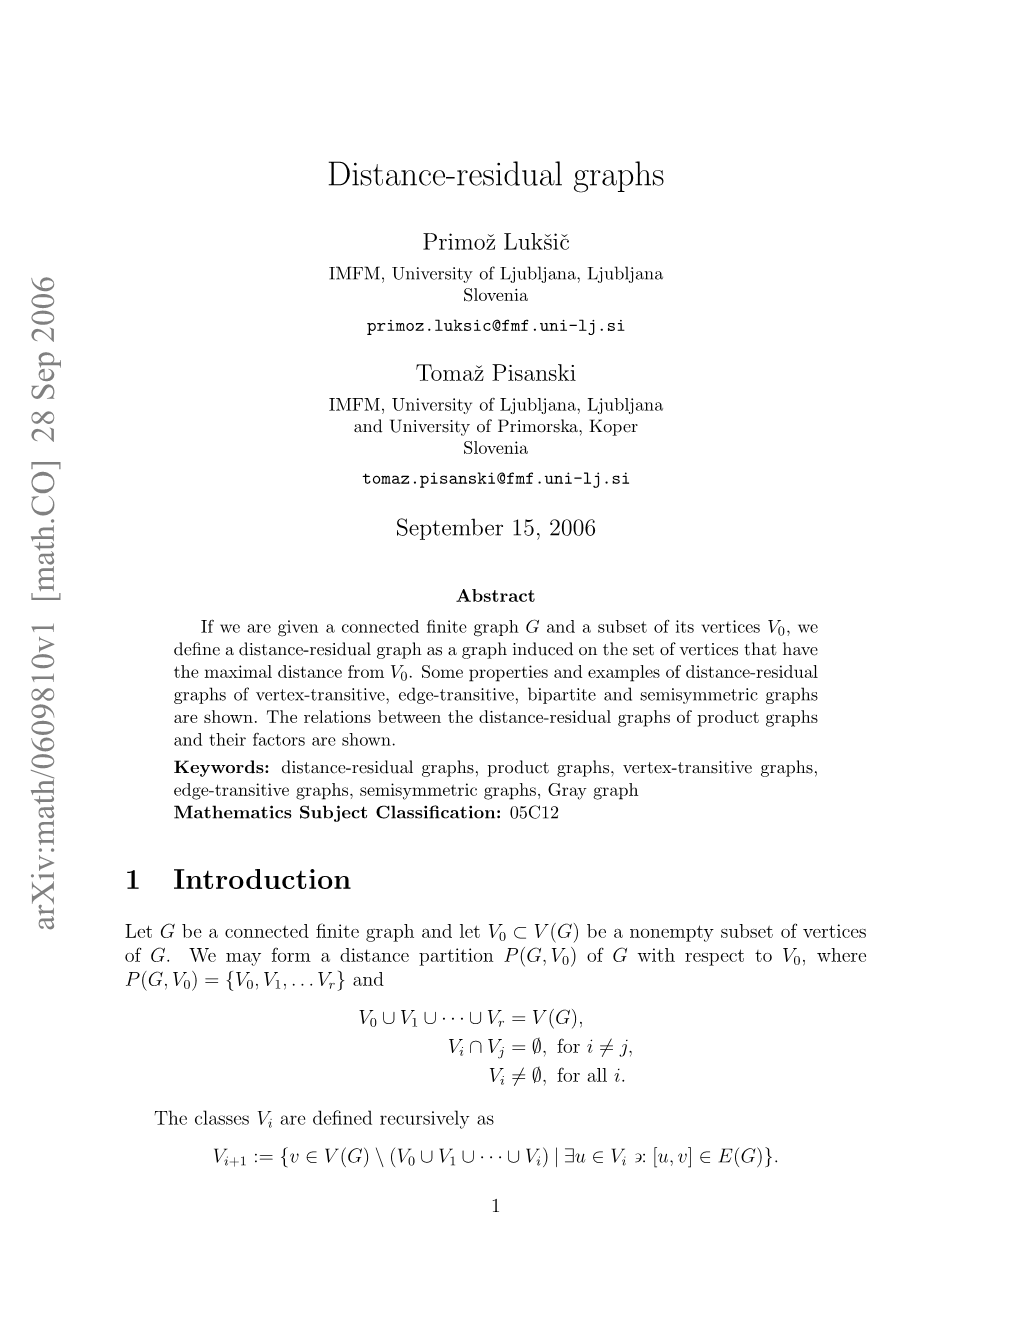 [Math.CO] 28 Sep 2006 Distance-Residual Graphs